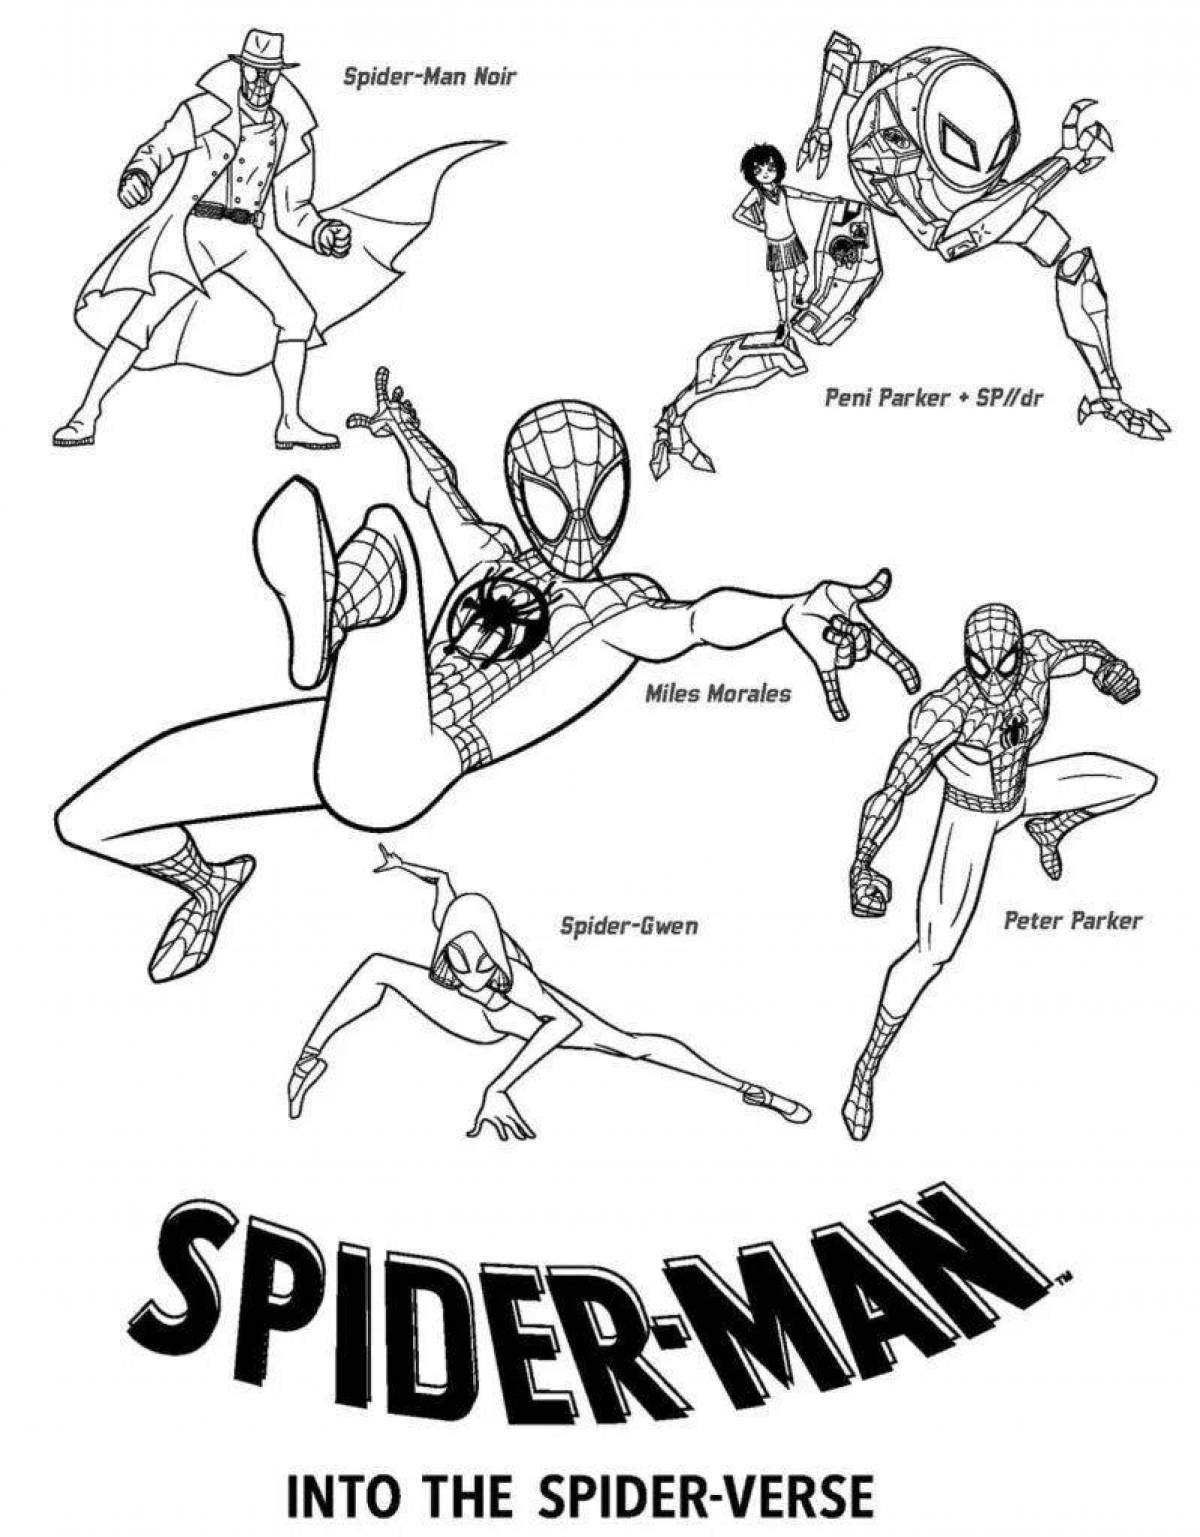 Joyful coloring of spider-man through the universes